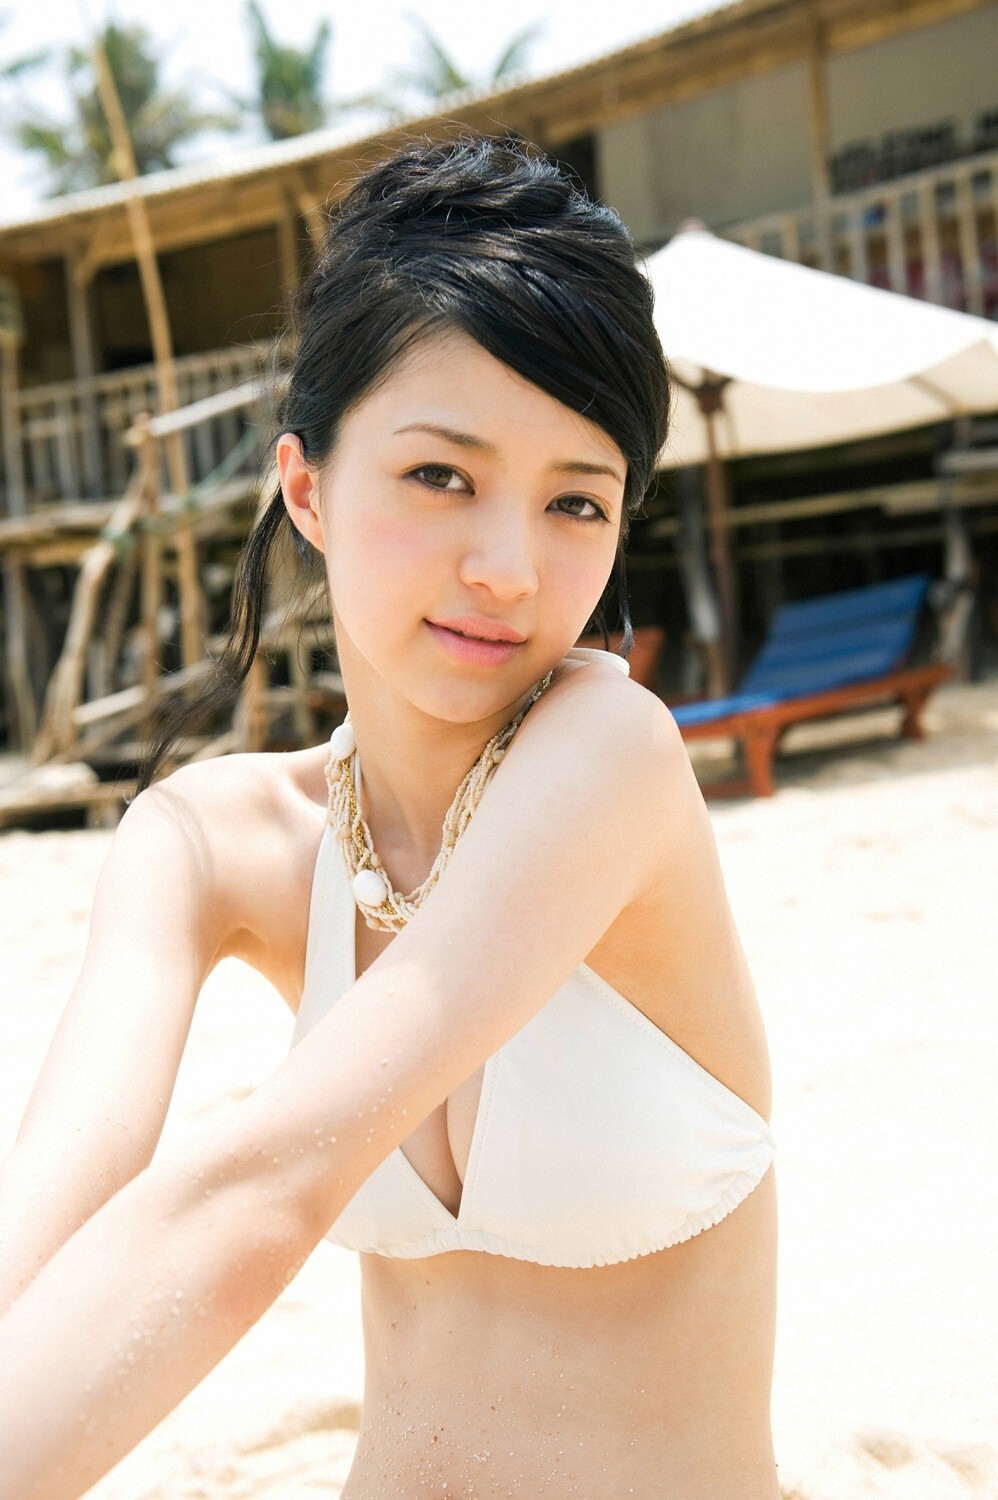 逢沢りな [Ysweb] [02-29] Vol.467 日本性感美女图片